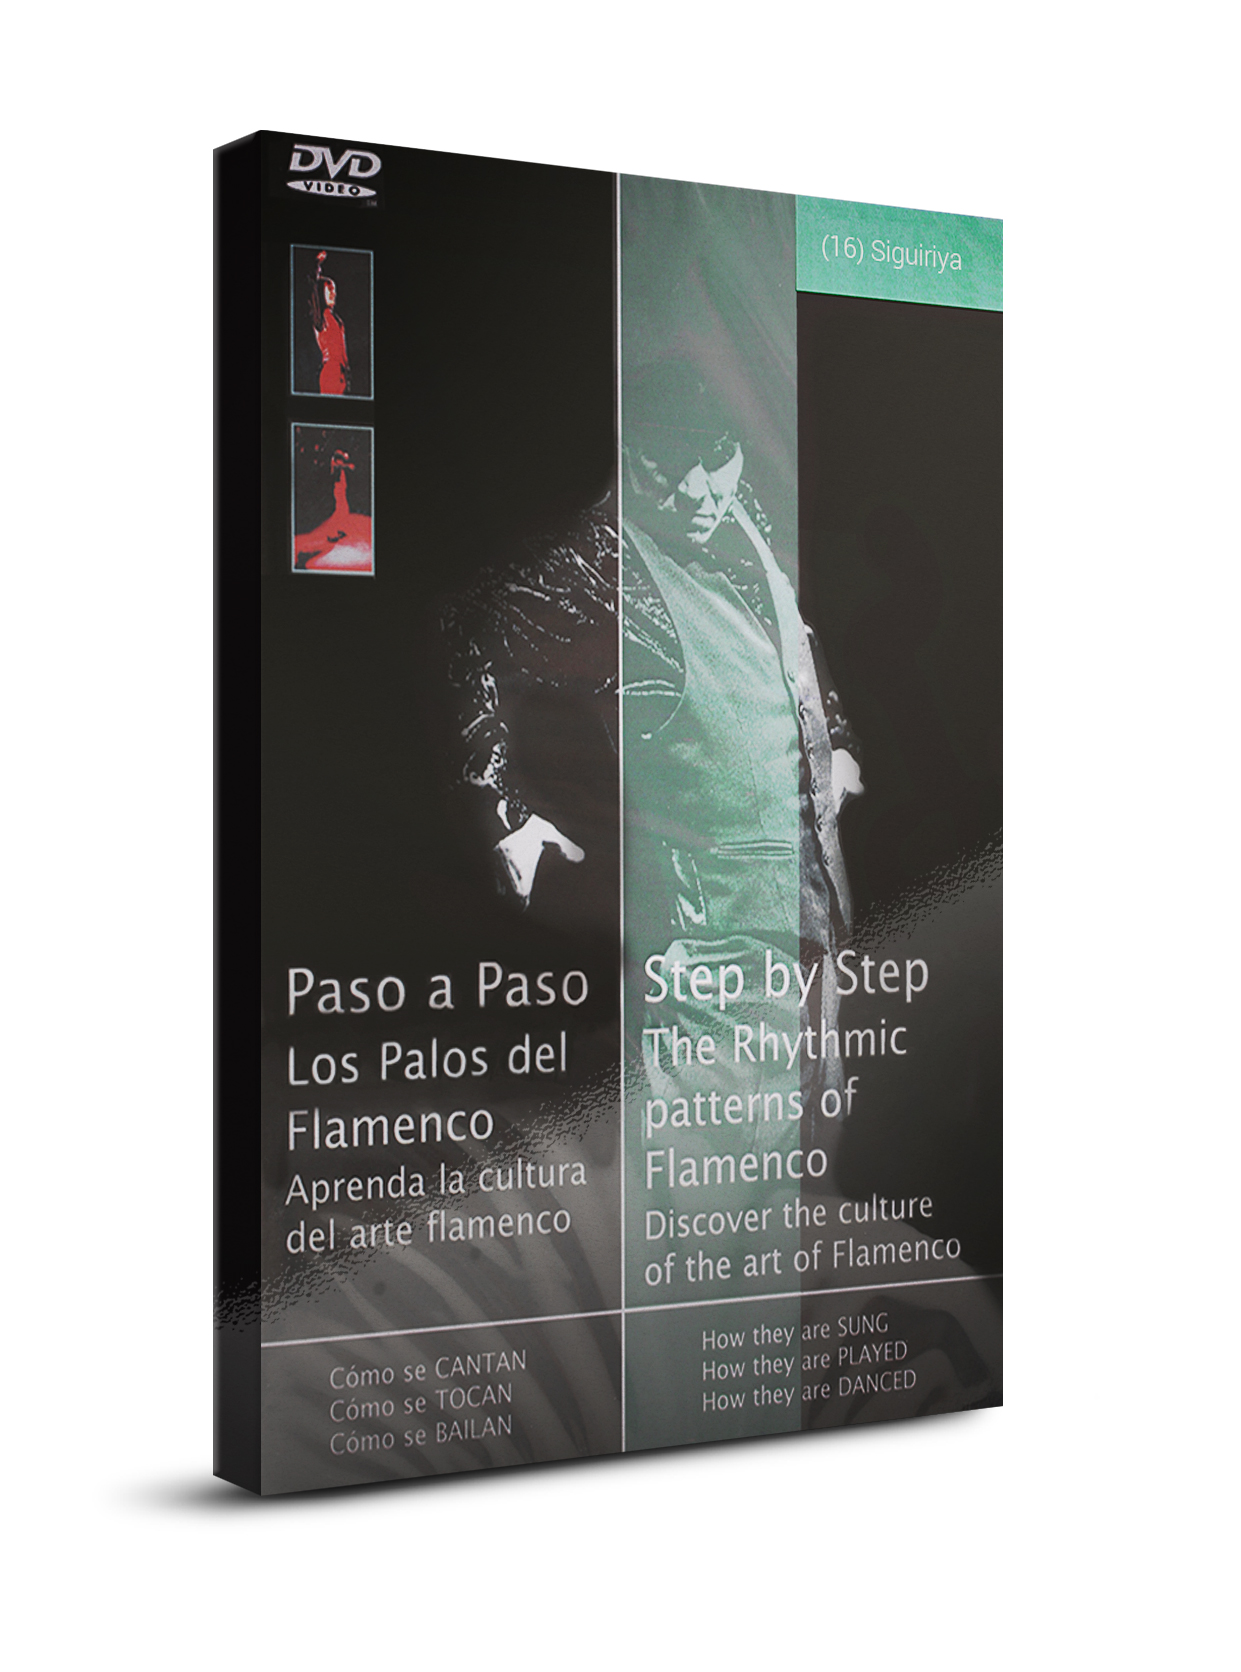 Flamenco dance classes Siguiriya DVD